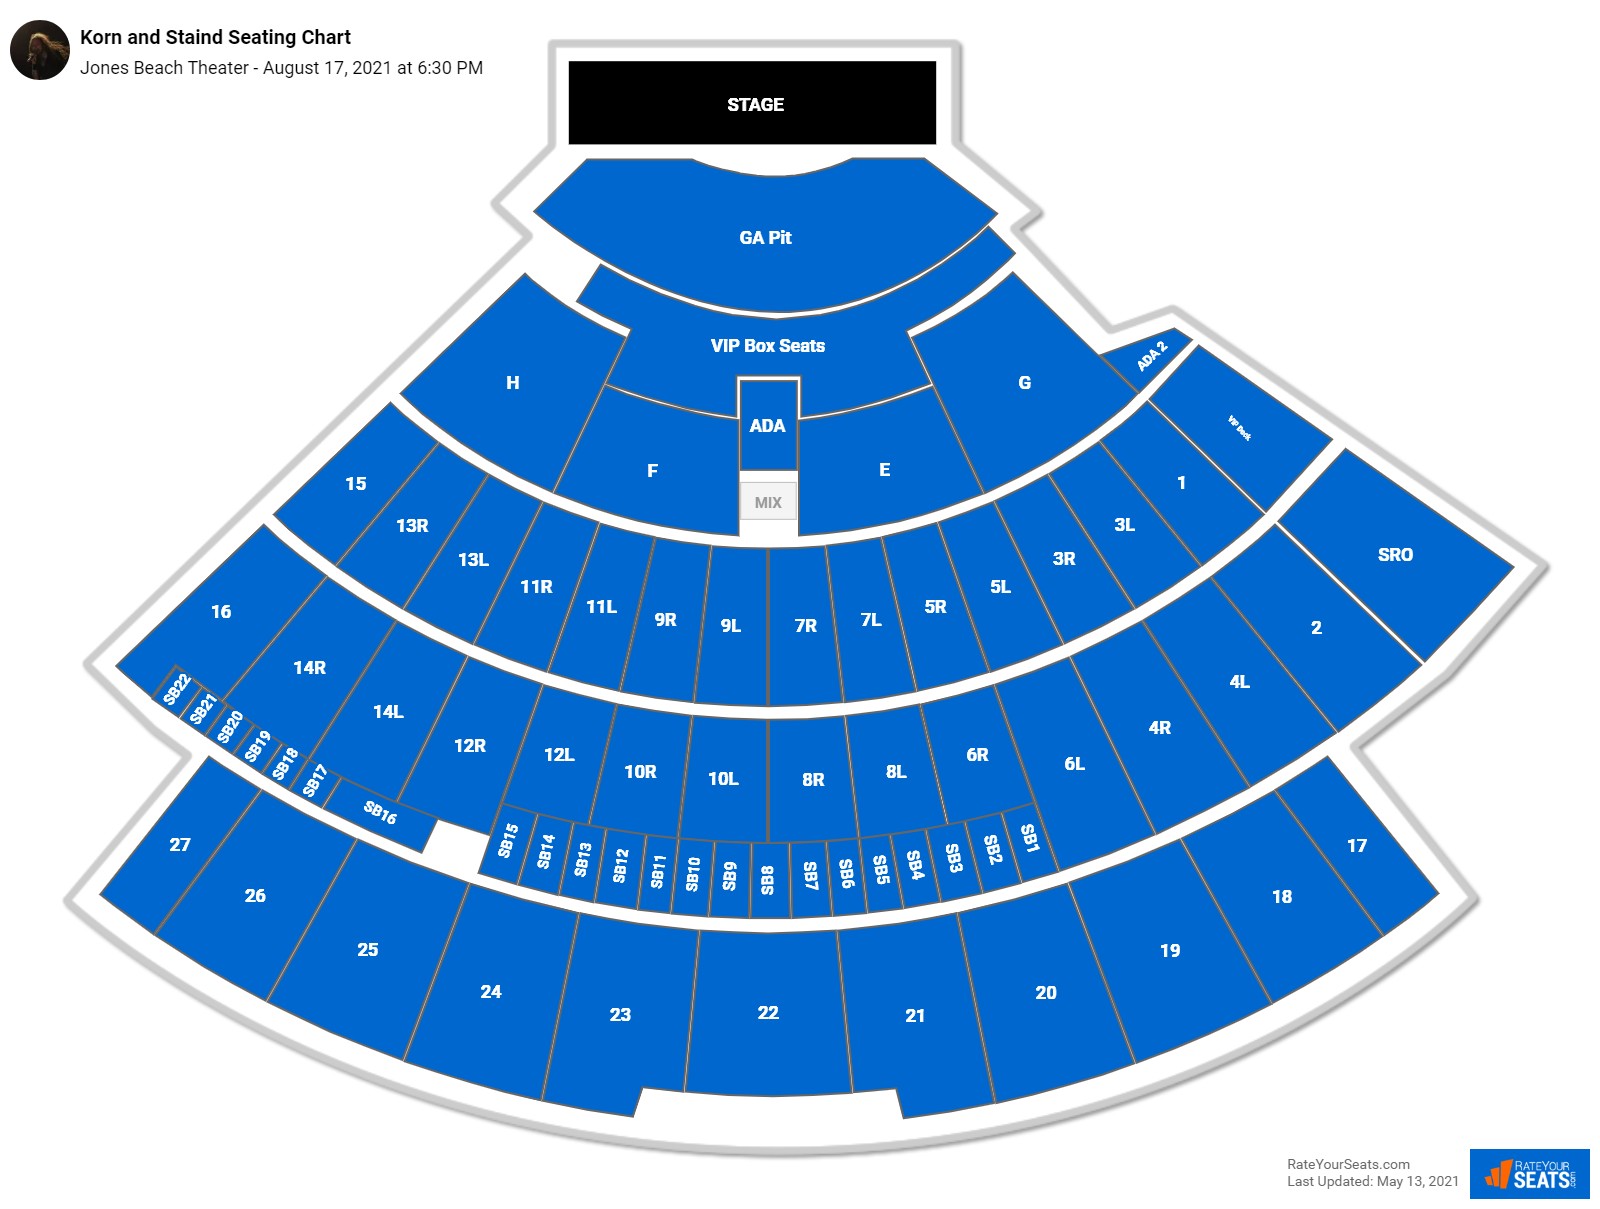 Jones Beach Theater Seating Chart - RateYourSeats.com